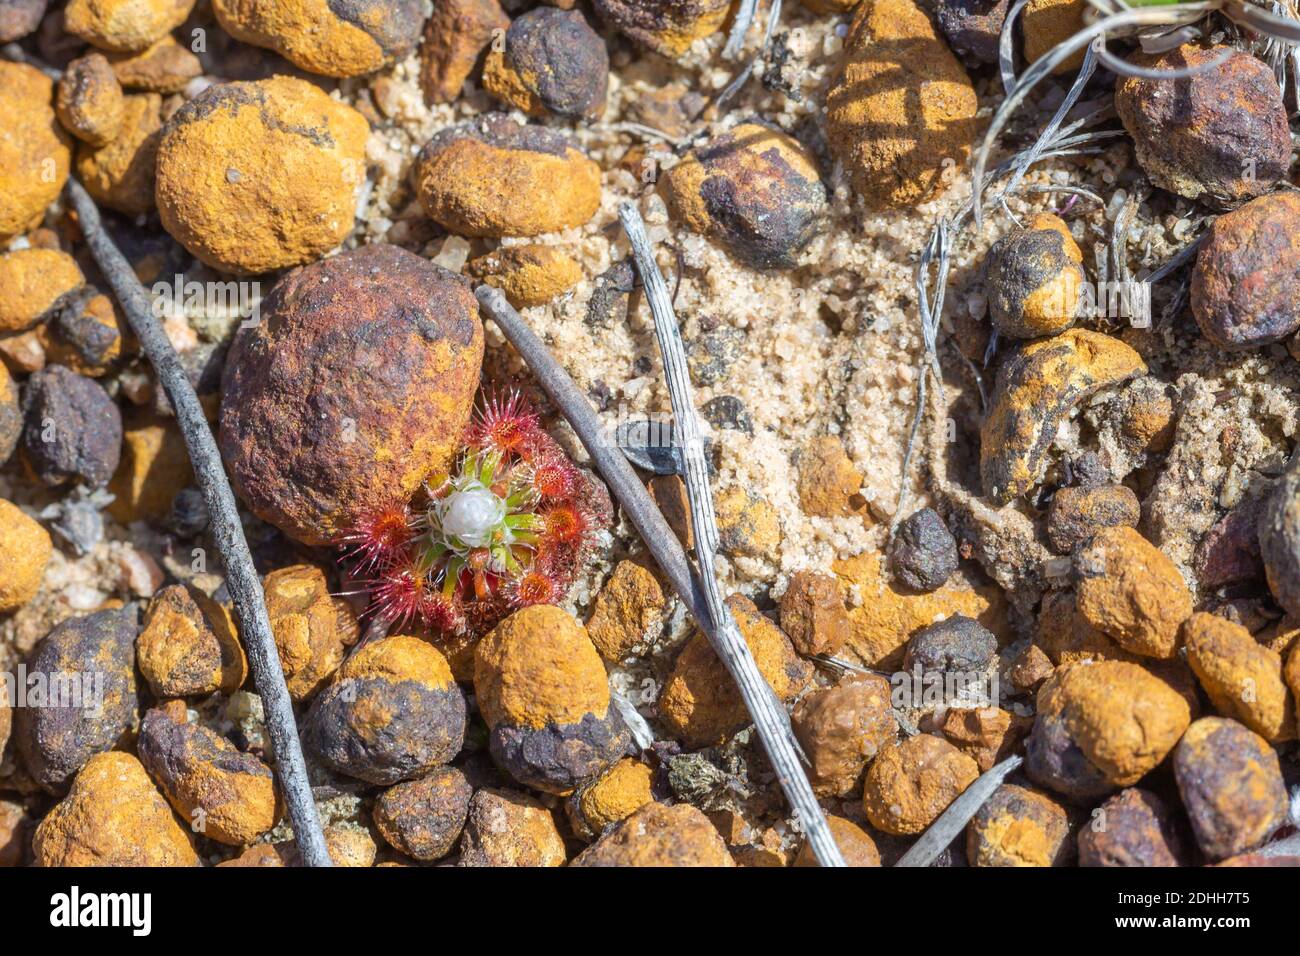 rosette growing pygmy Sundew Drosera leucoblasta west of Hopetoun, Western Australia, view from the side Stock Photo